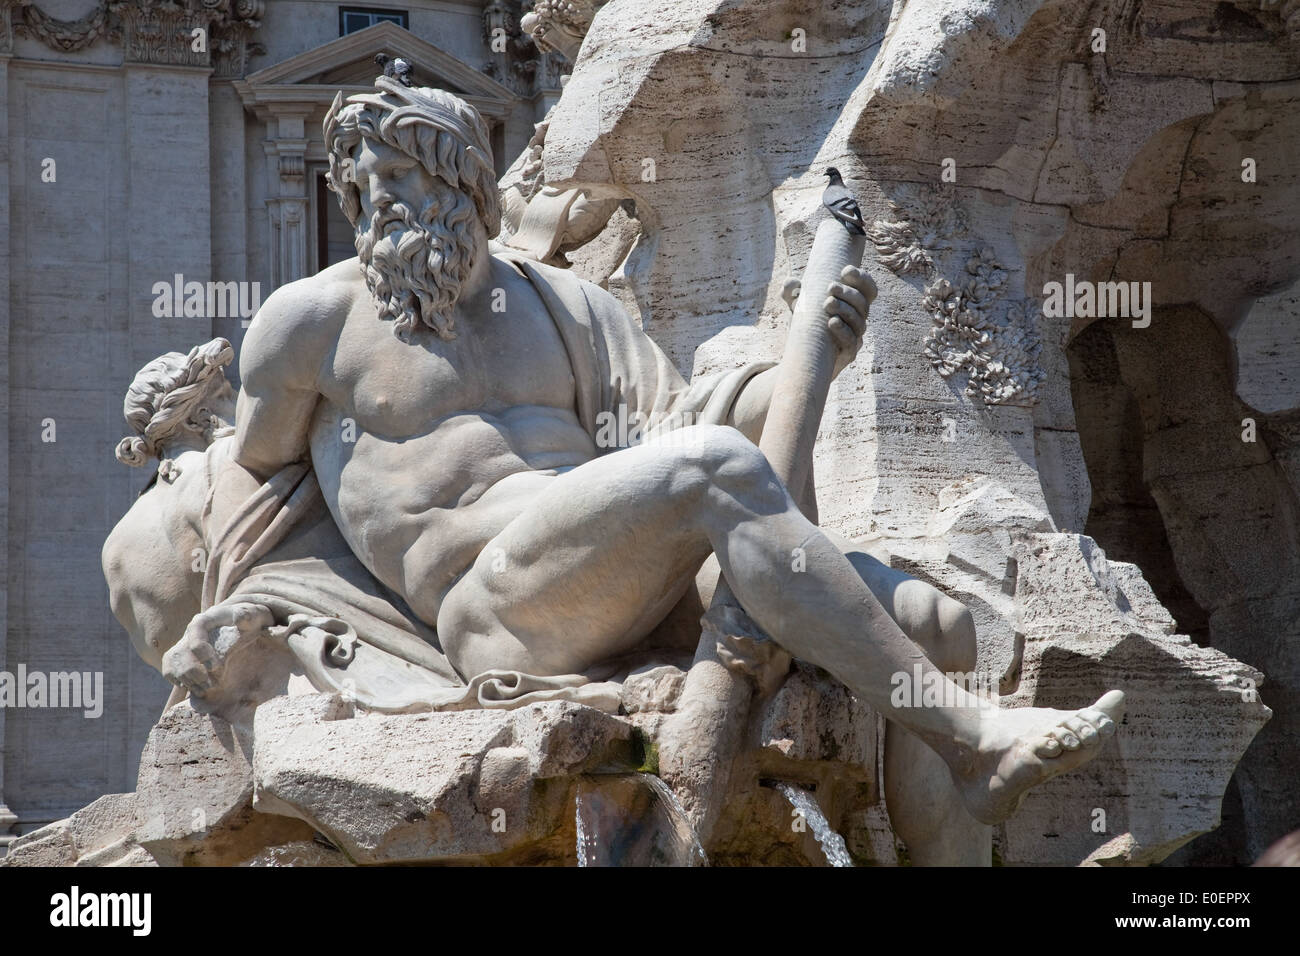 Fontana dei Quattro Fiumi, Rom, Italien - Fontana dei Quattro Fiumi, Rome, Italy Stock Photo